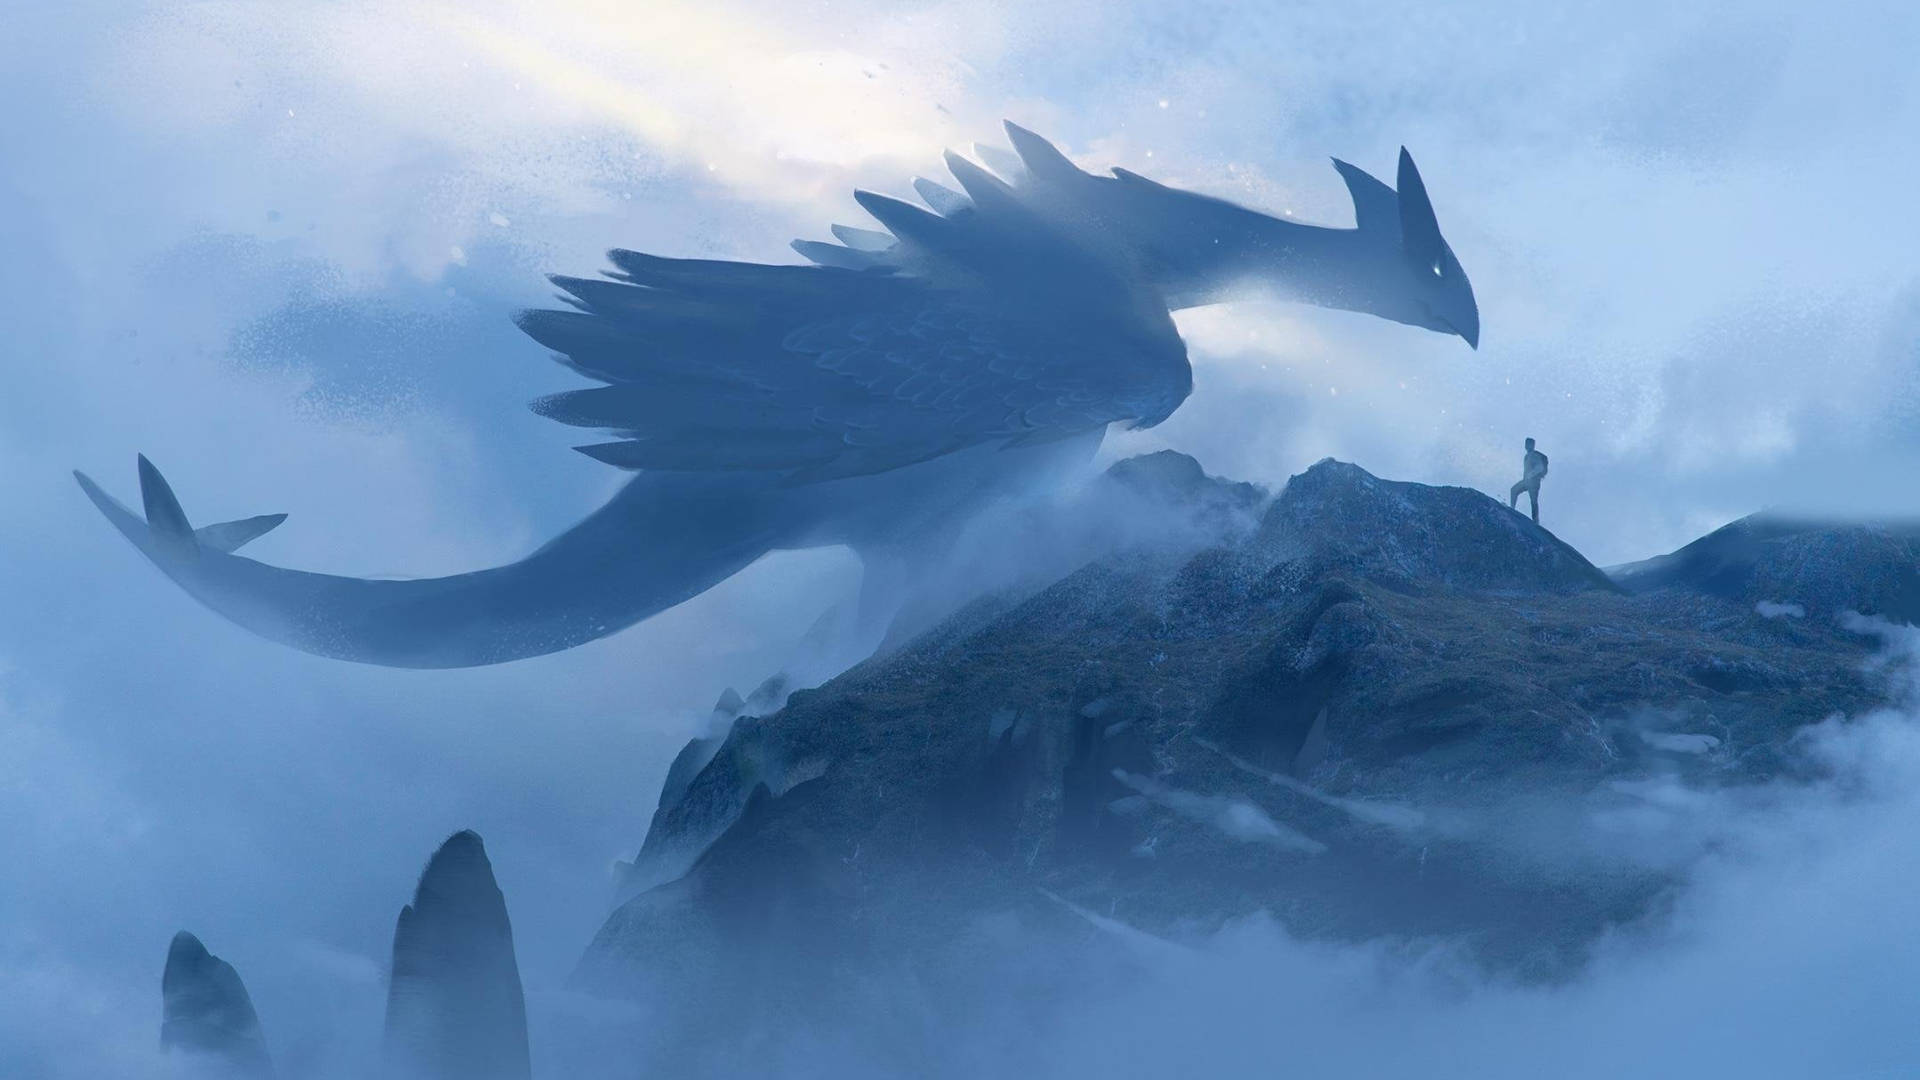 A majestic Lugia soars high above a mountainous landscape. Wallpaper